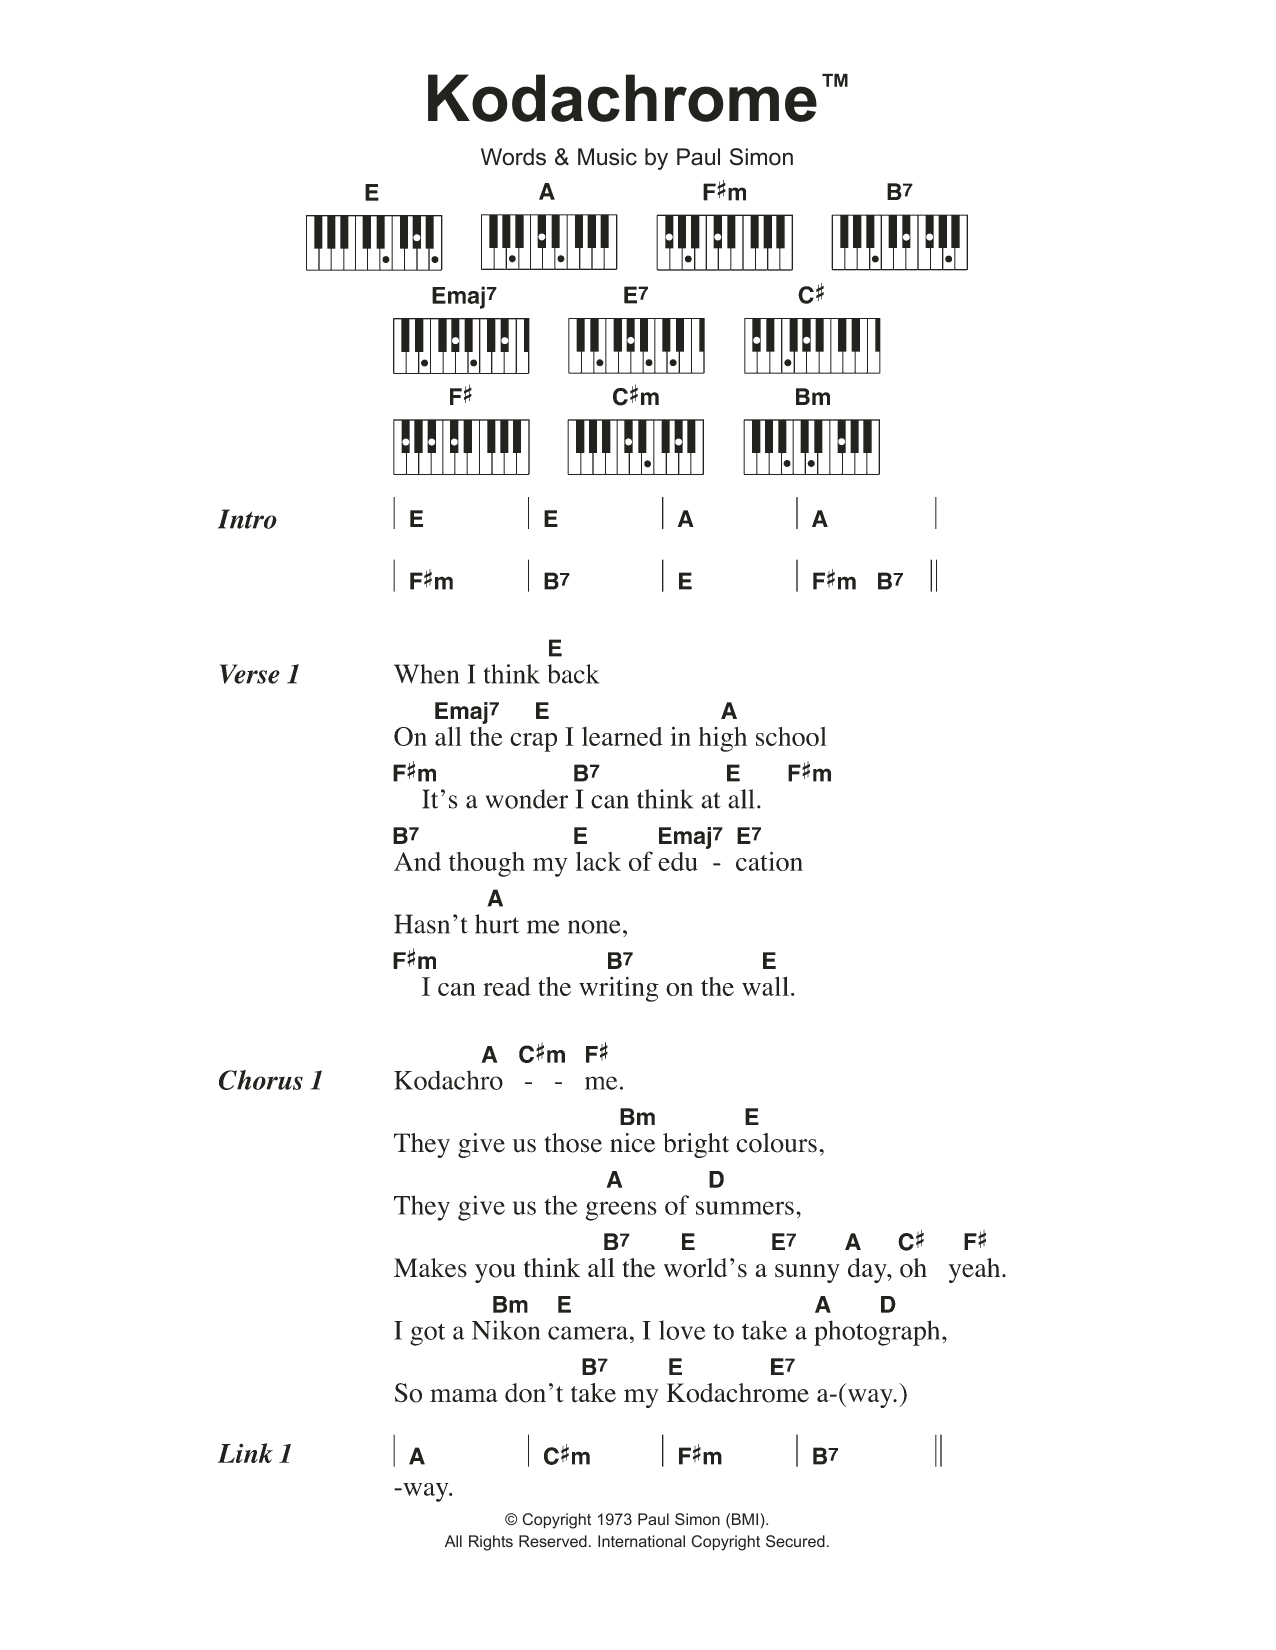 Paul Simon KodachromeTM Sheet Music Notes & Chords for Piano Chords/Lyrics - Download or Print PDF